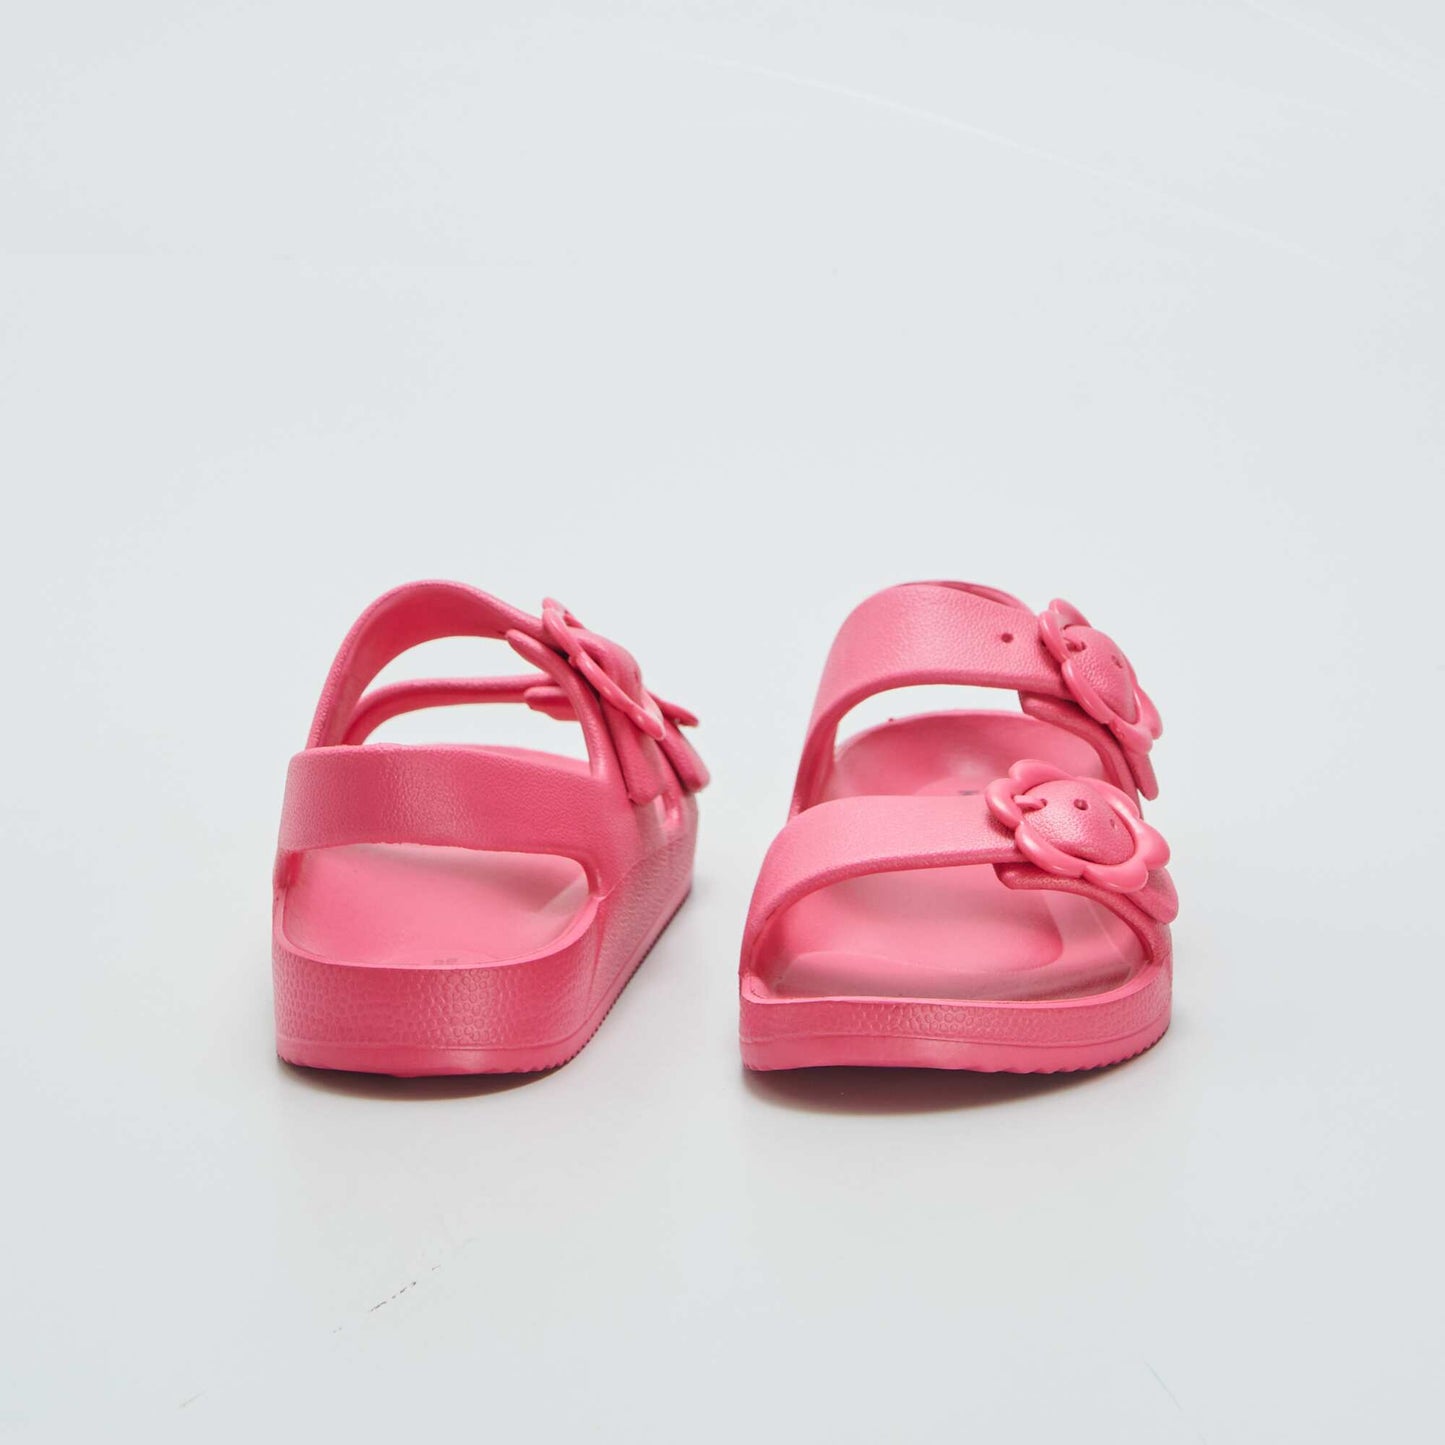 Plastic sandals PINK